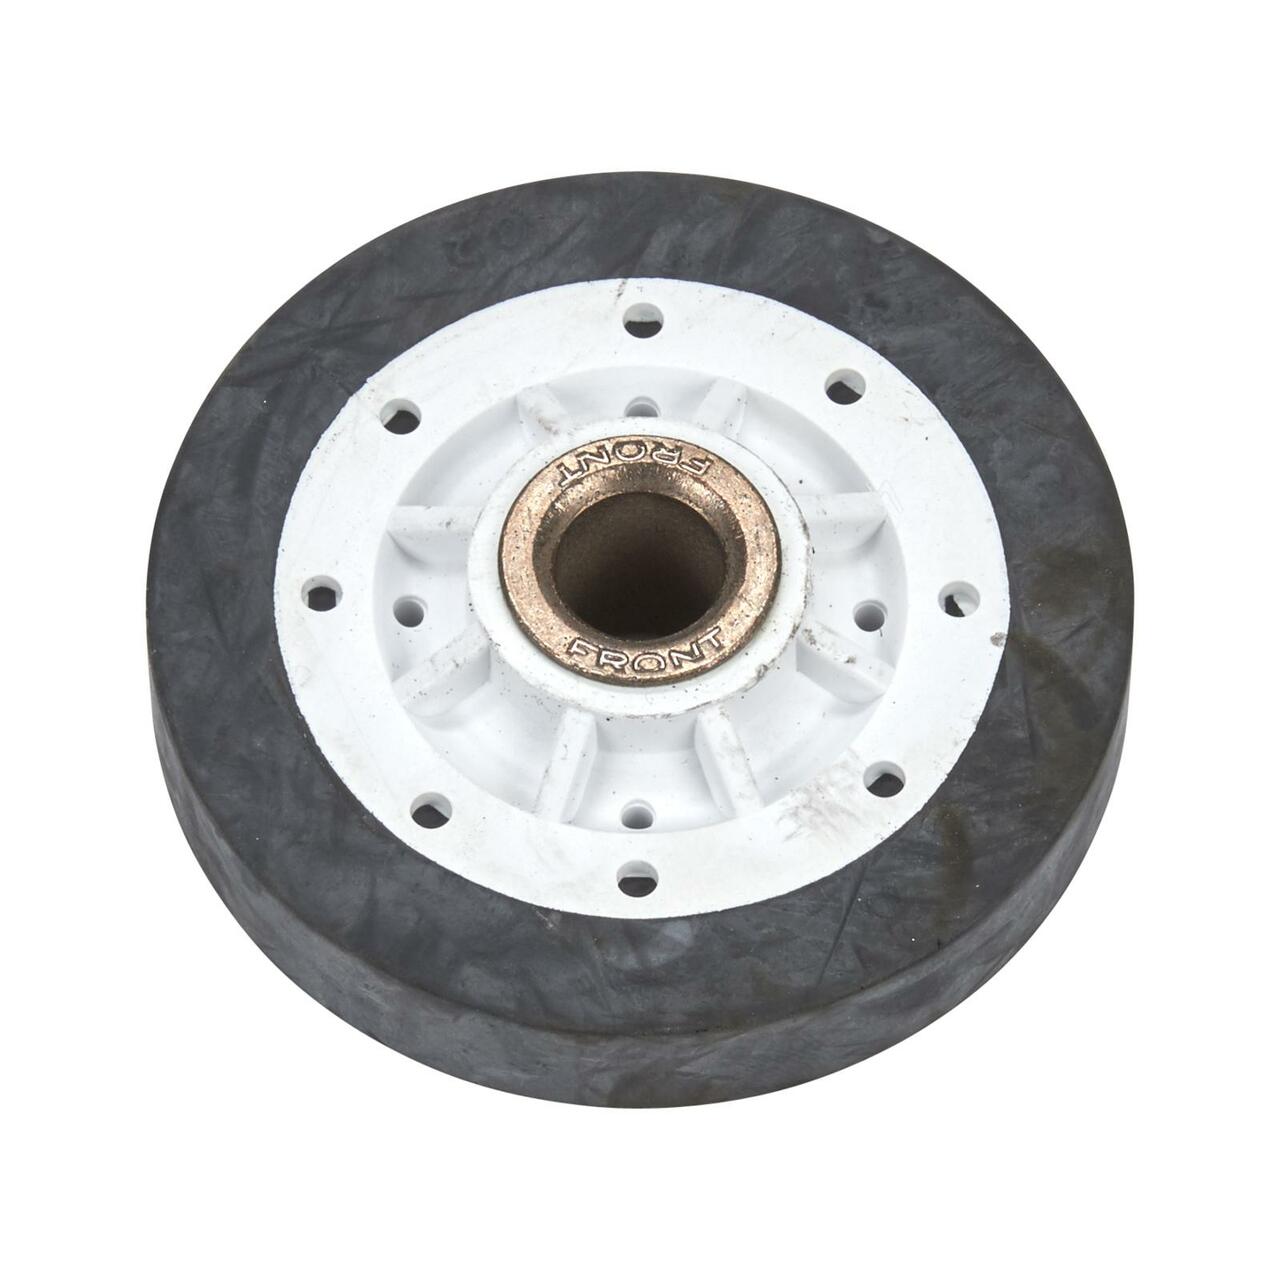 Whirlpool Dryer Drum Support Roller. Part #WP37001042